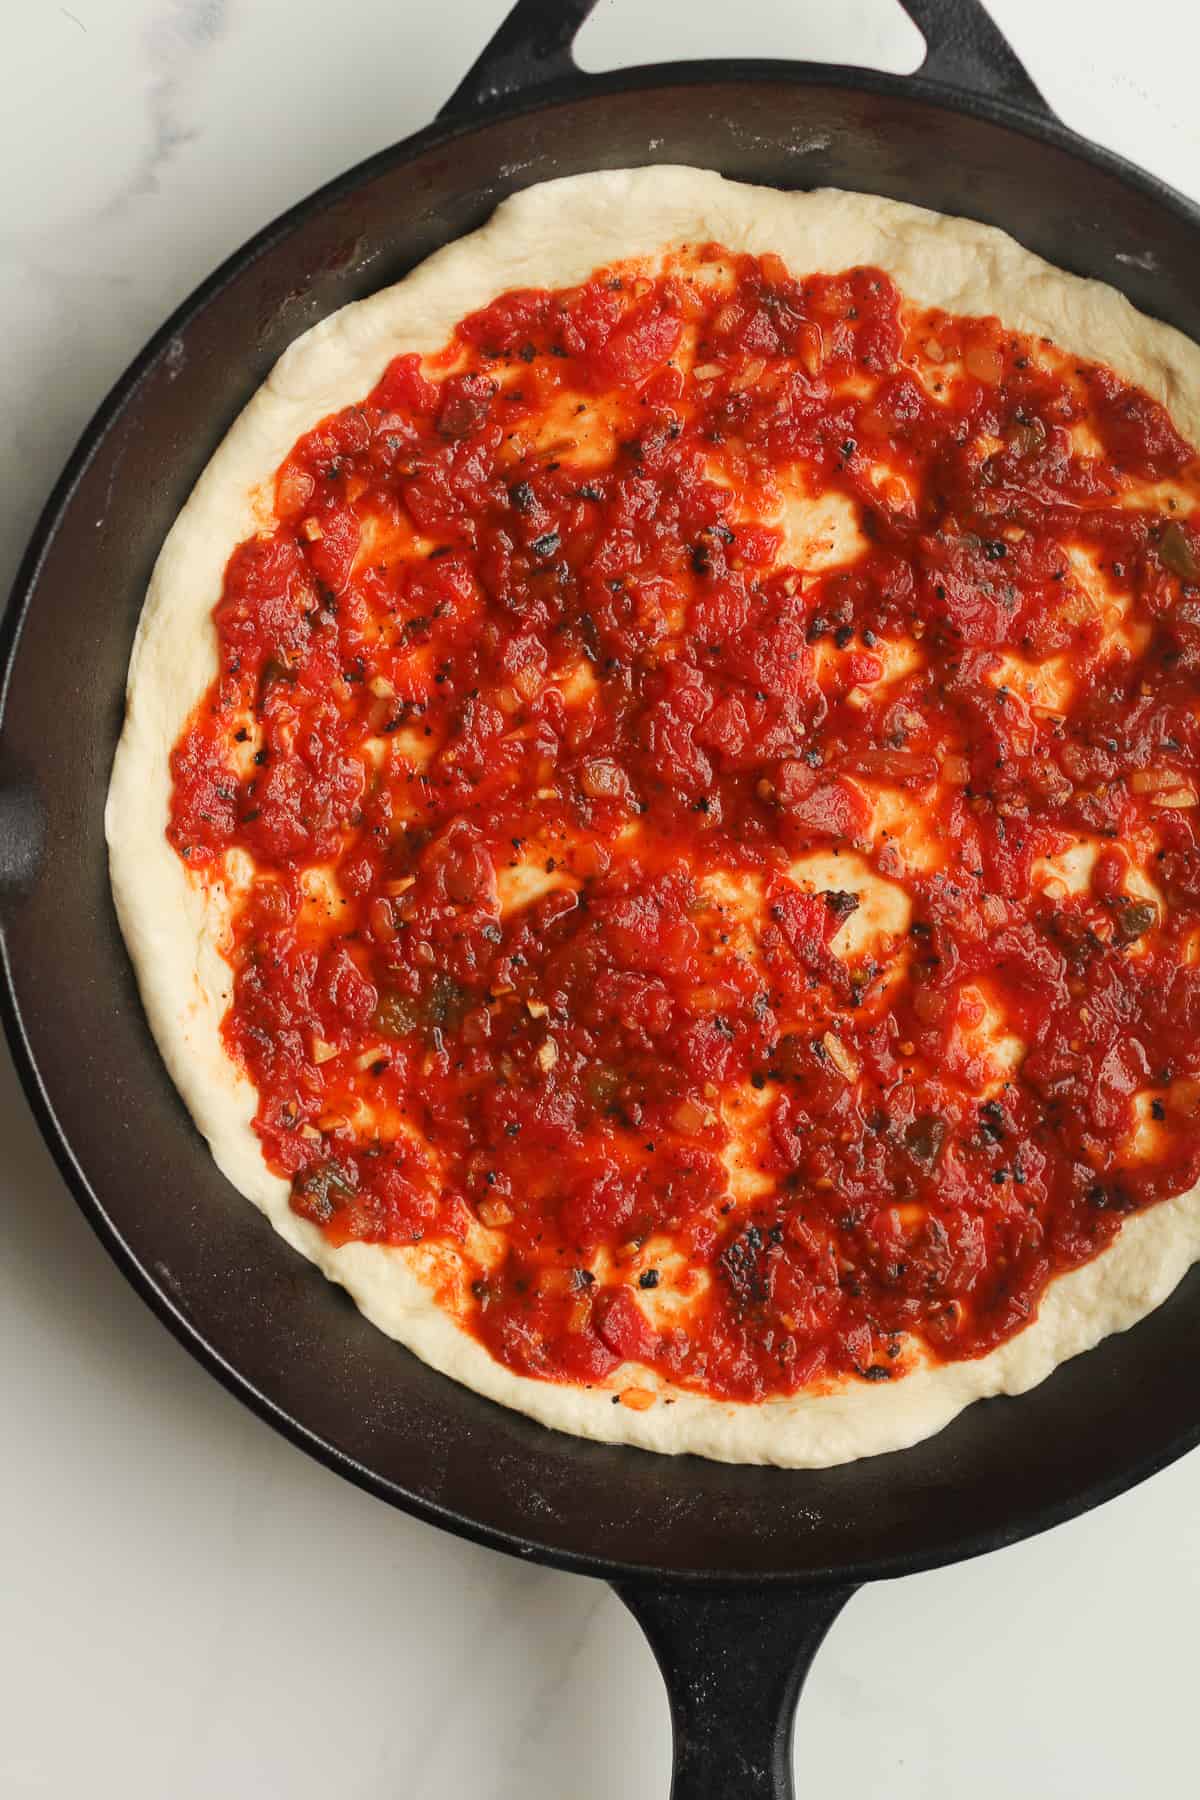 Homemade pizza sauce on the dough.